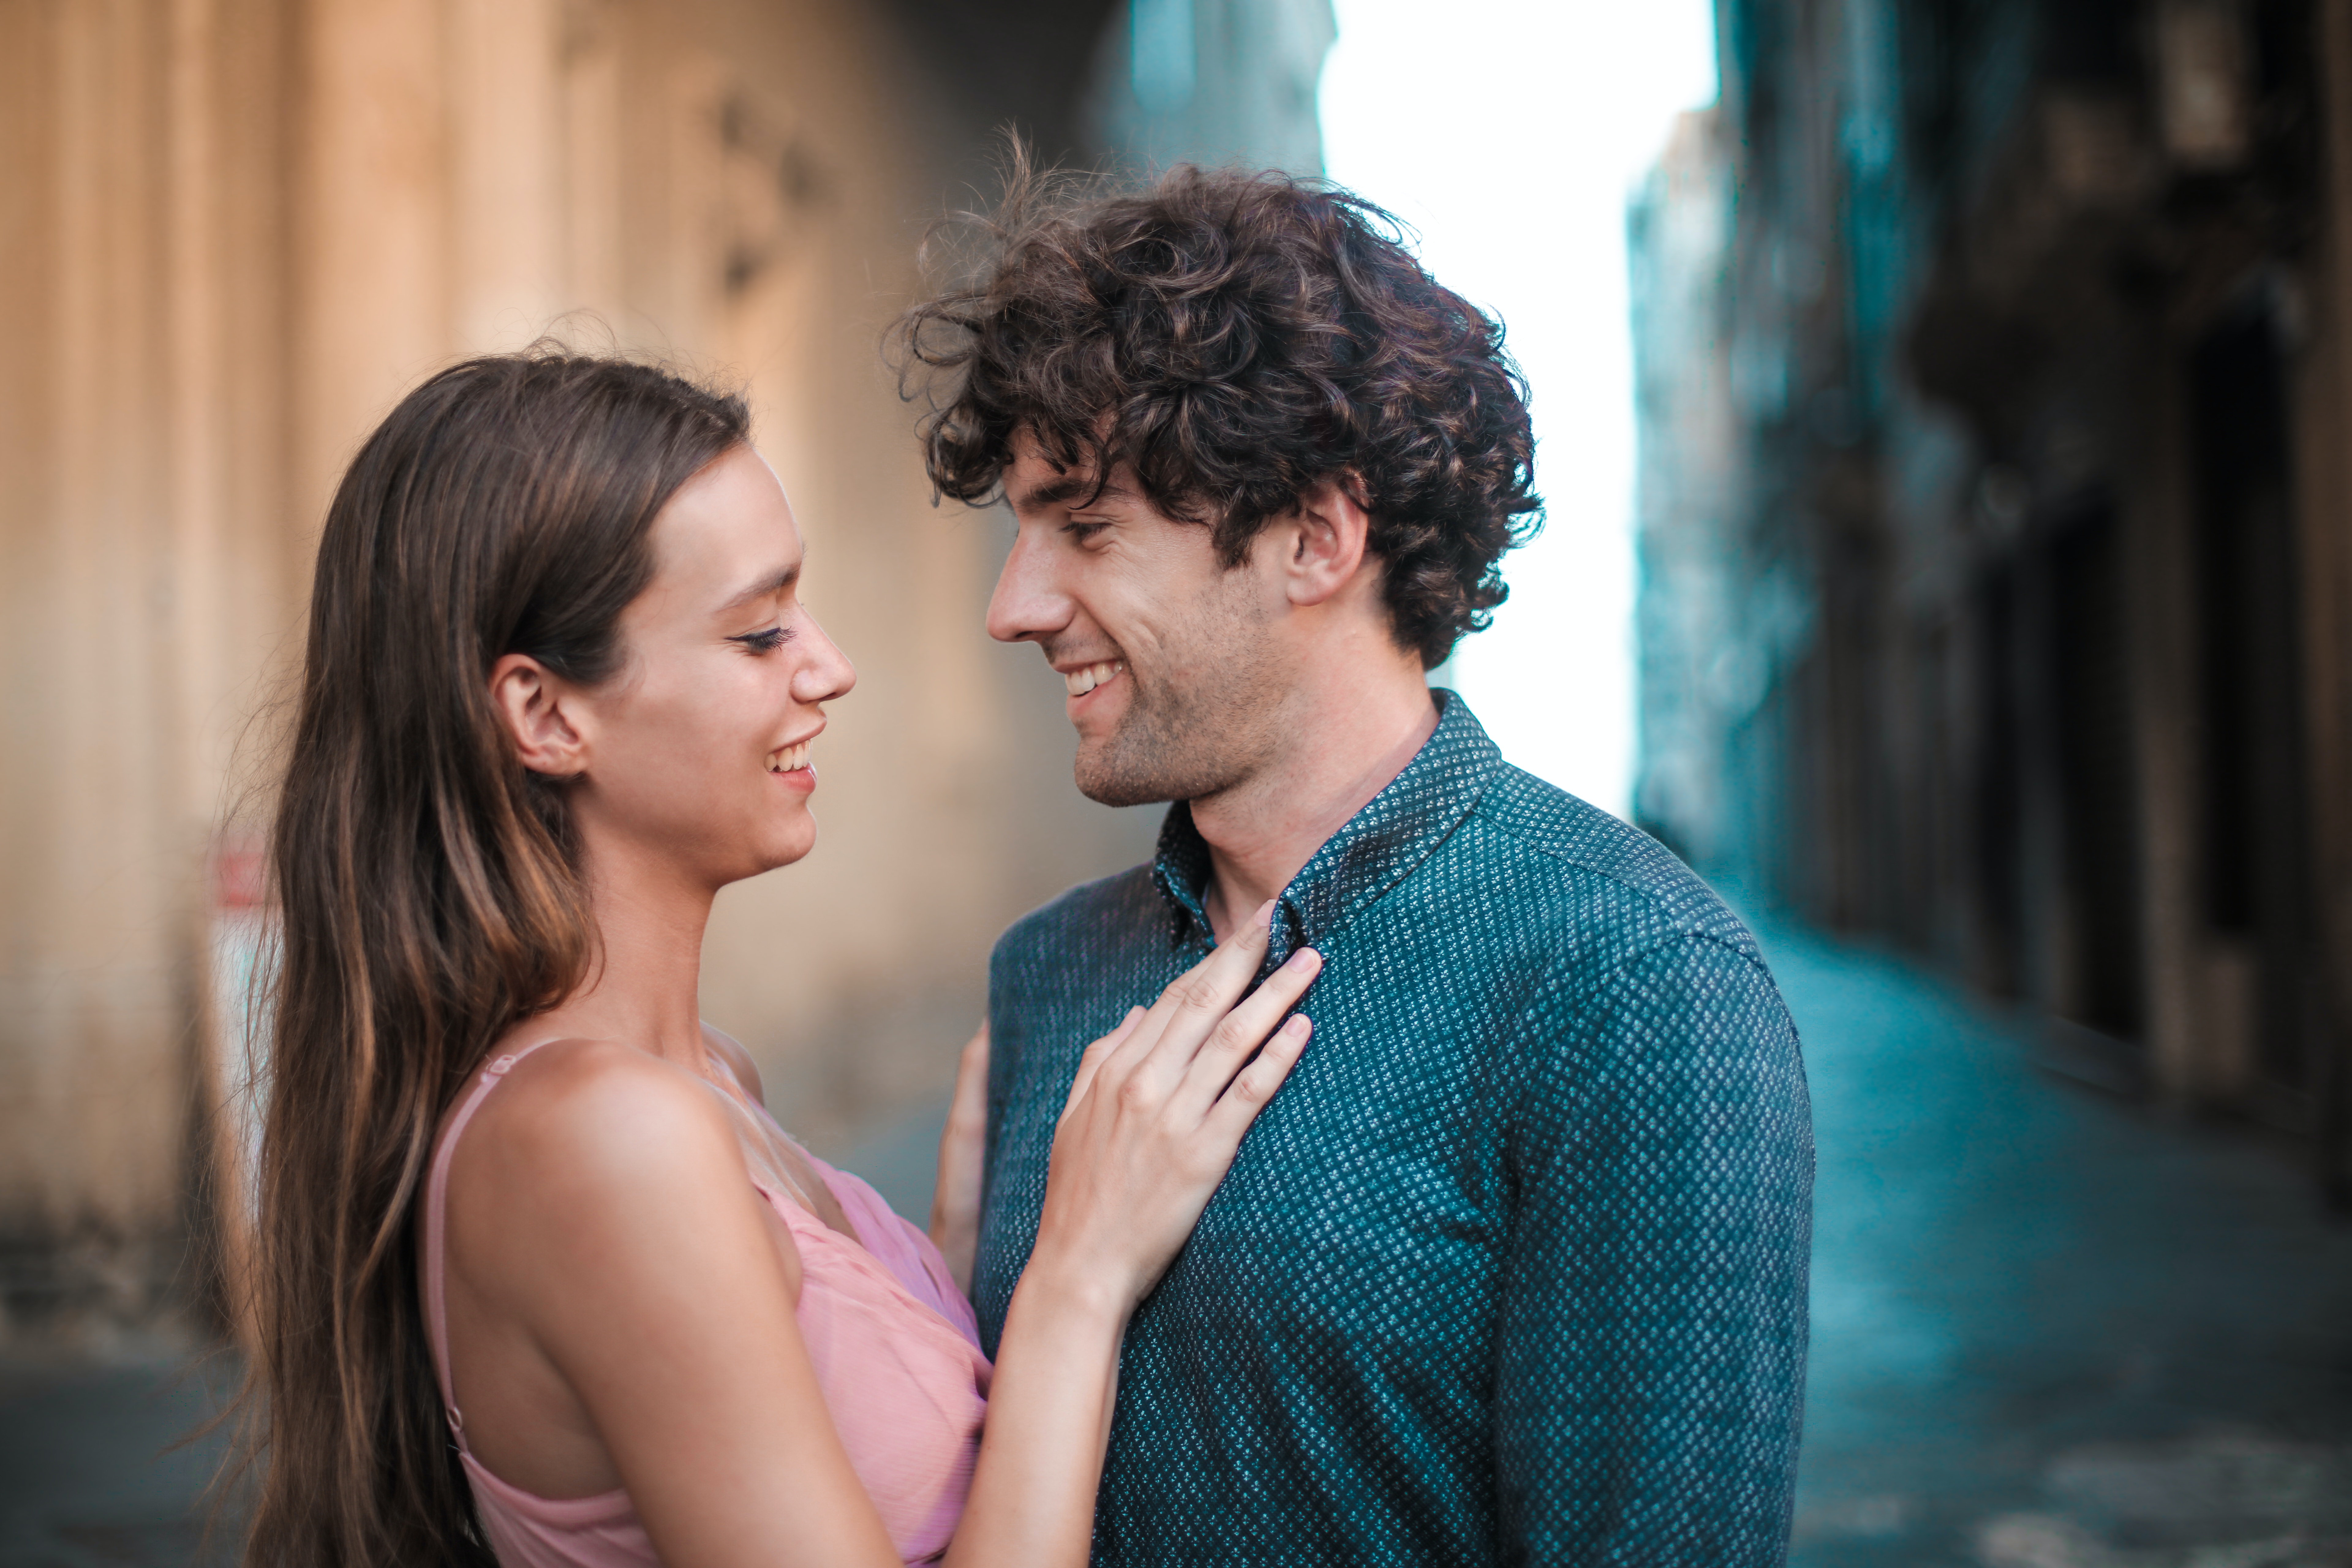 A man and woman flirting. | Source: Pexels